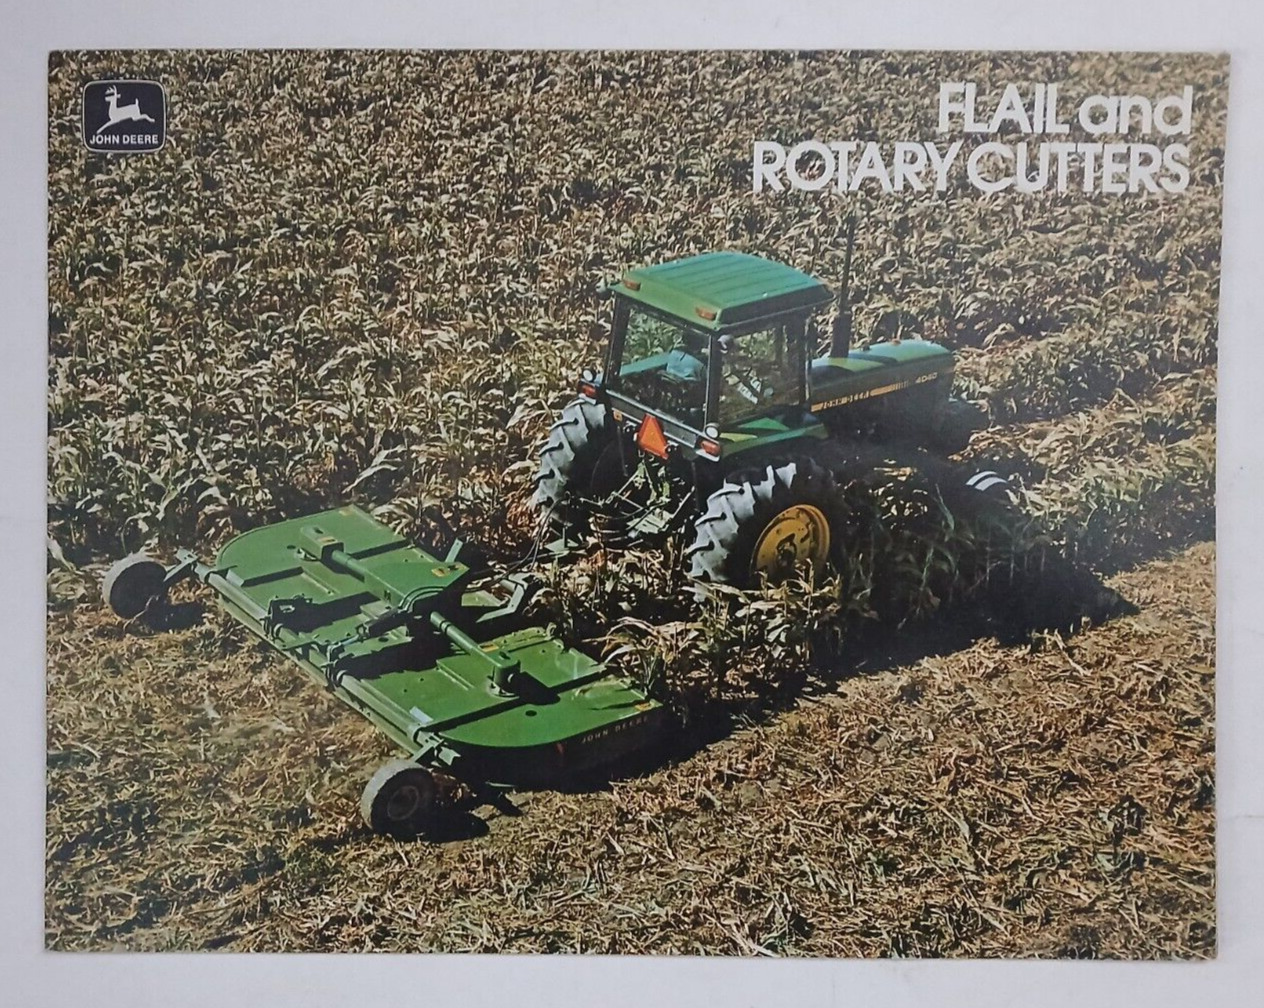 VTG John Deere Flail & Rotary Cutters For 1978 Brochure Ad